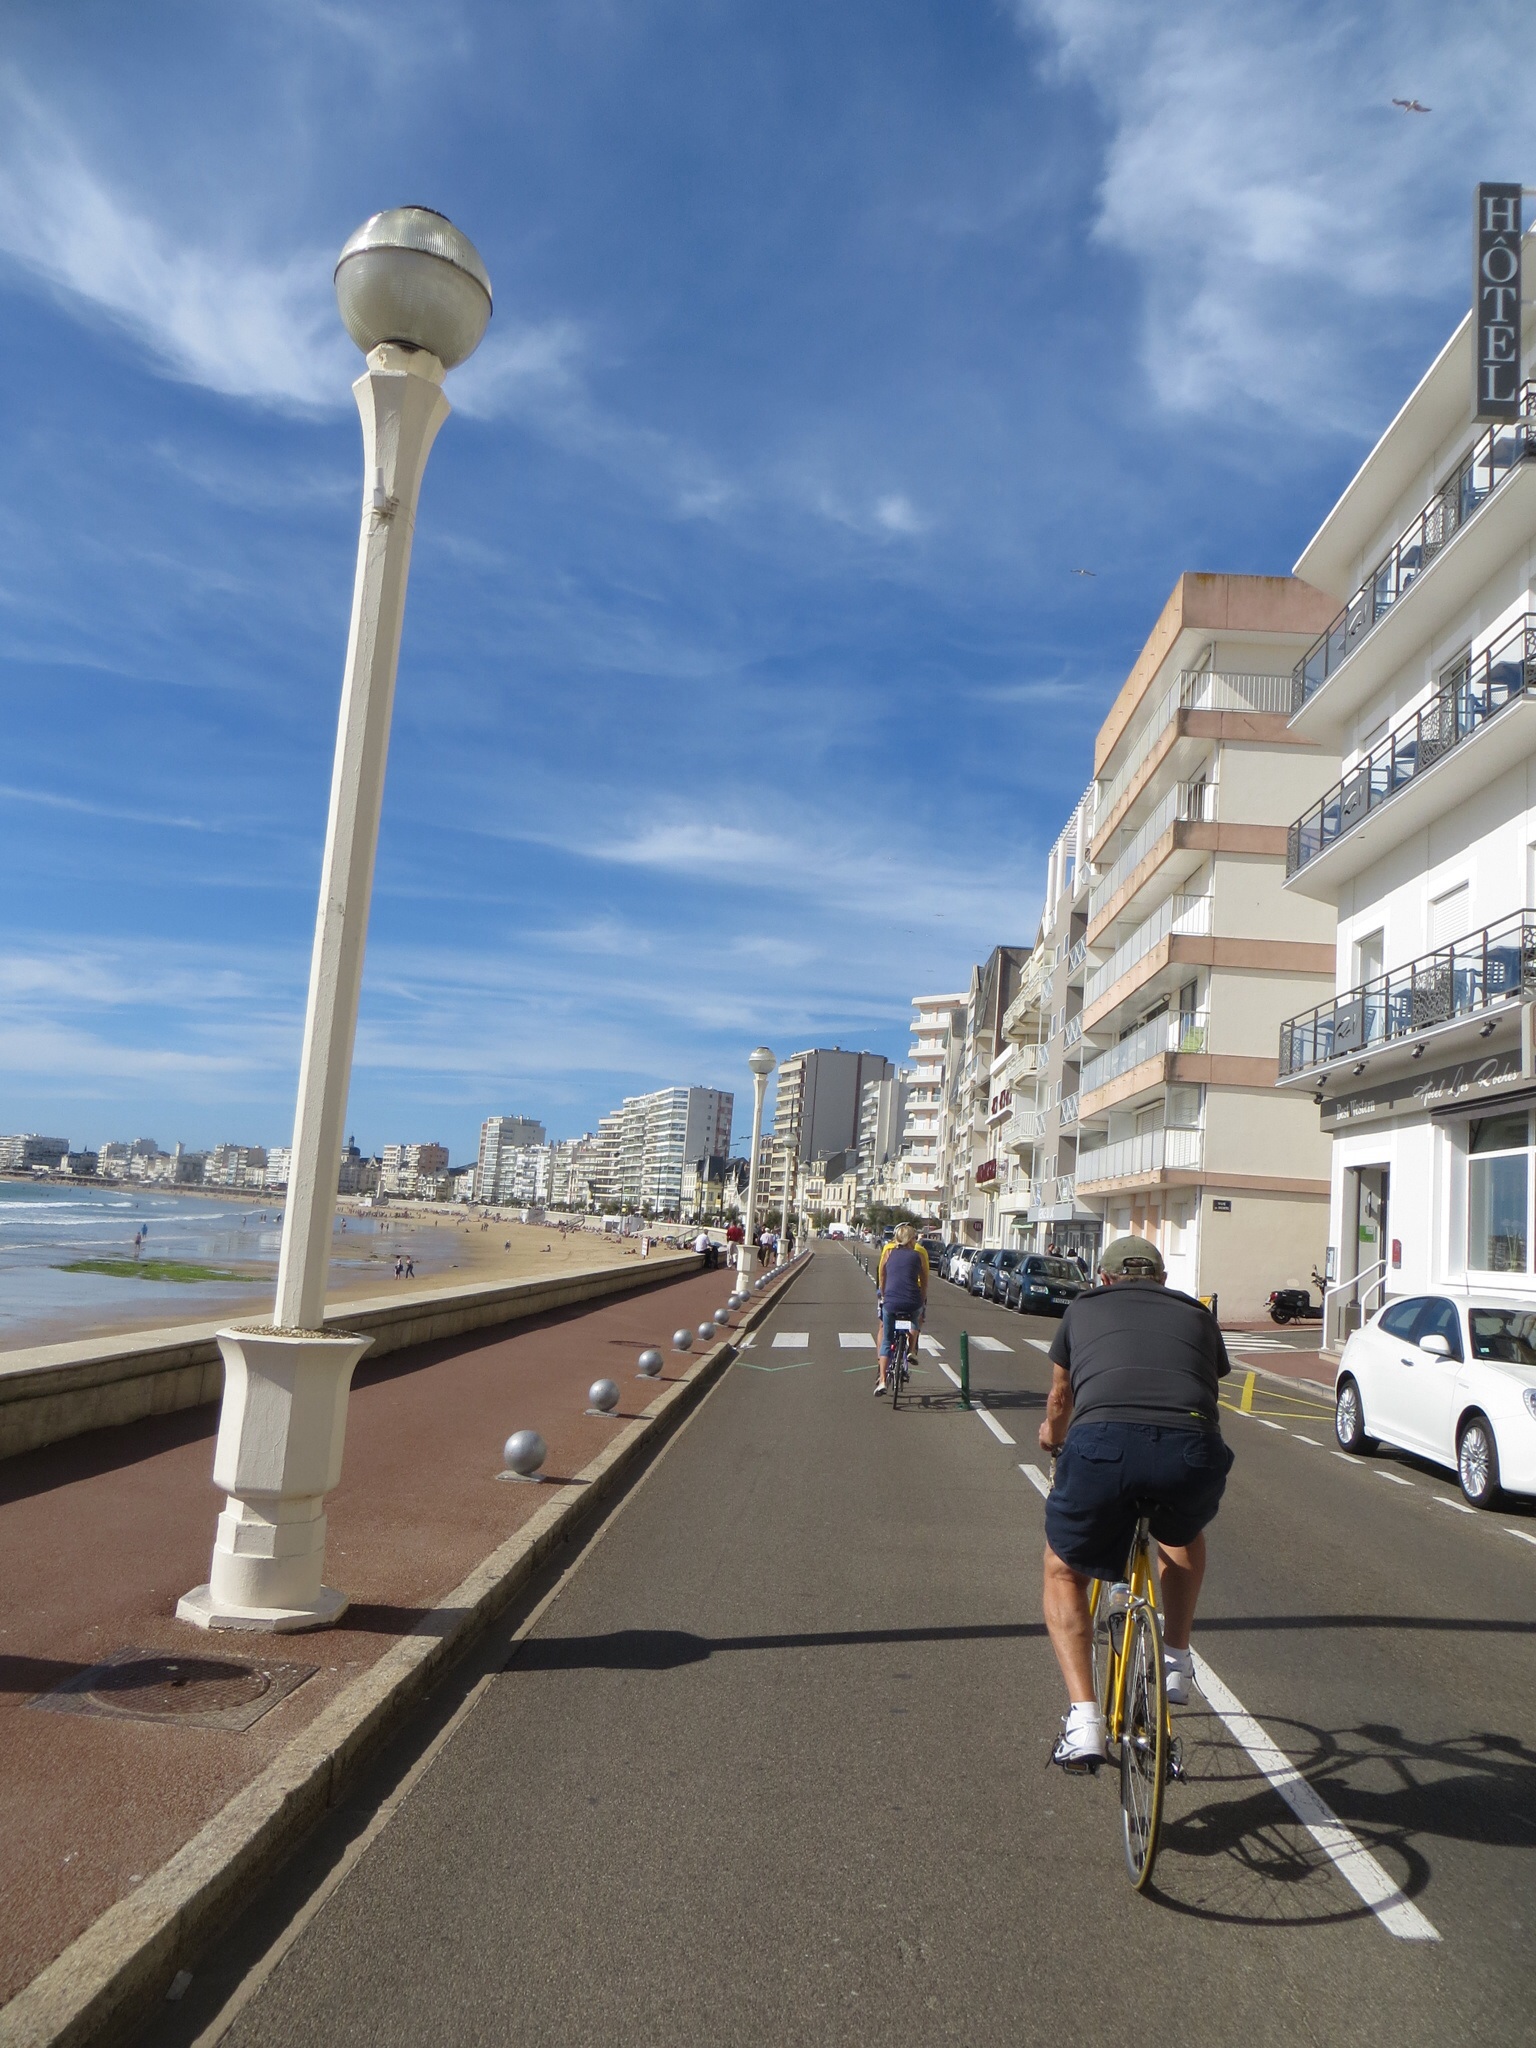 Cycling along the beach promenade